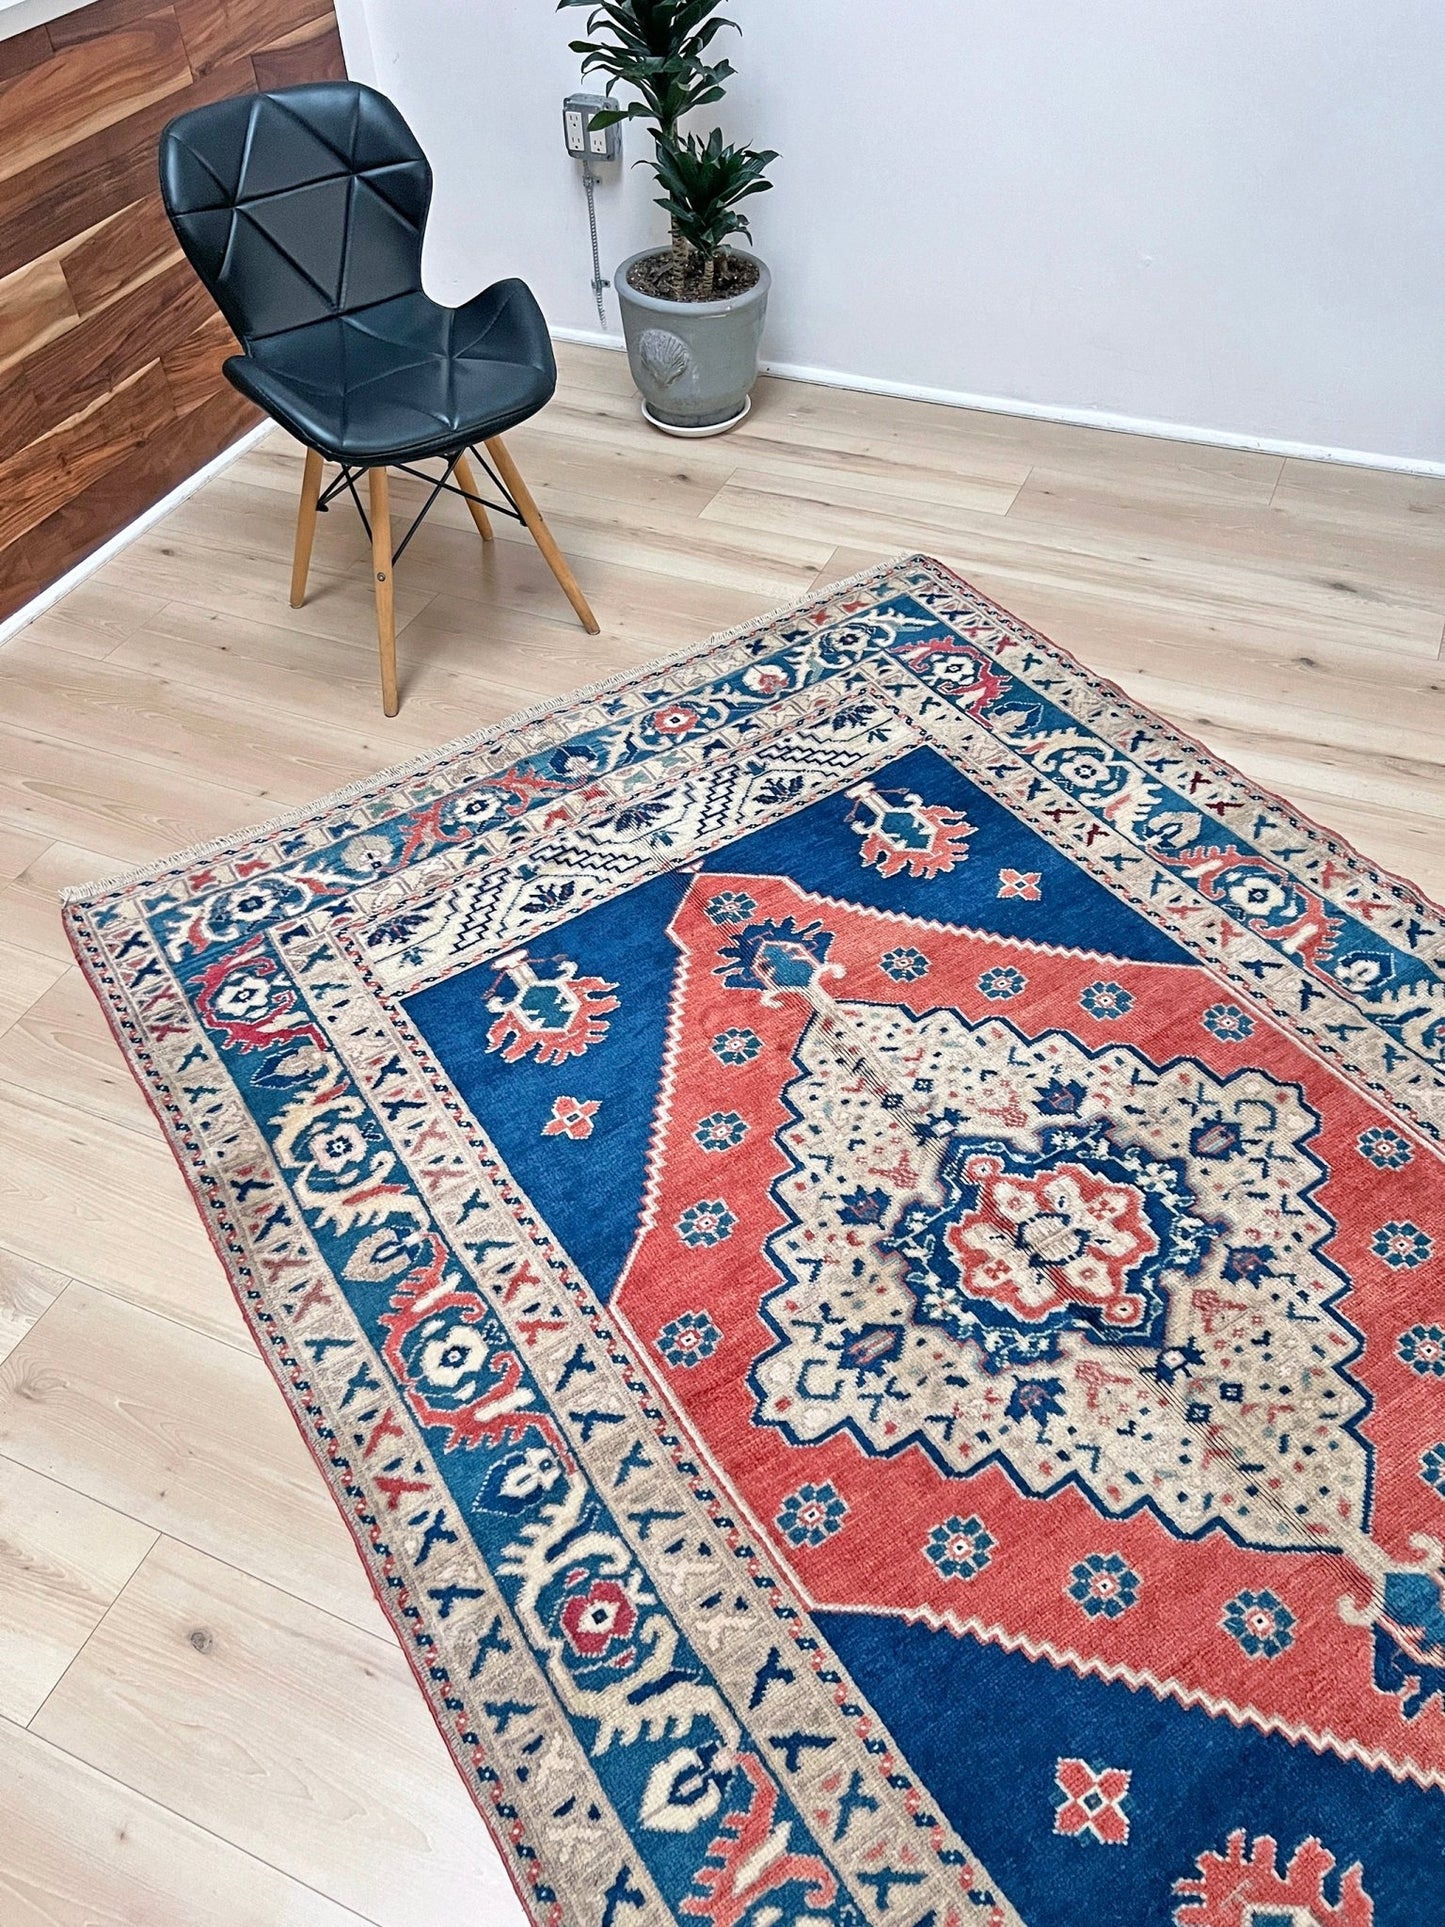 Taspinar muted turkish rug shop san francisco bay area. Oriental rug shop palo alto. Buy handmade wool rug online.